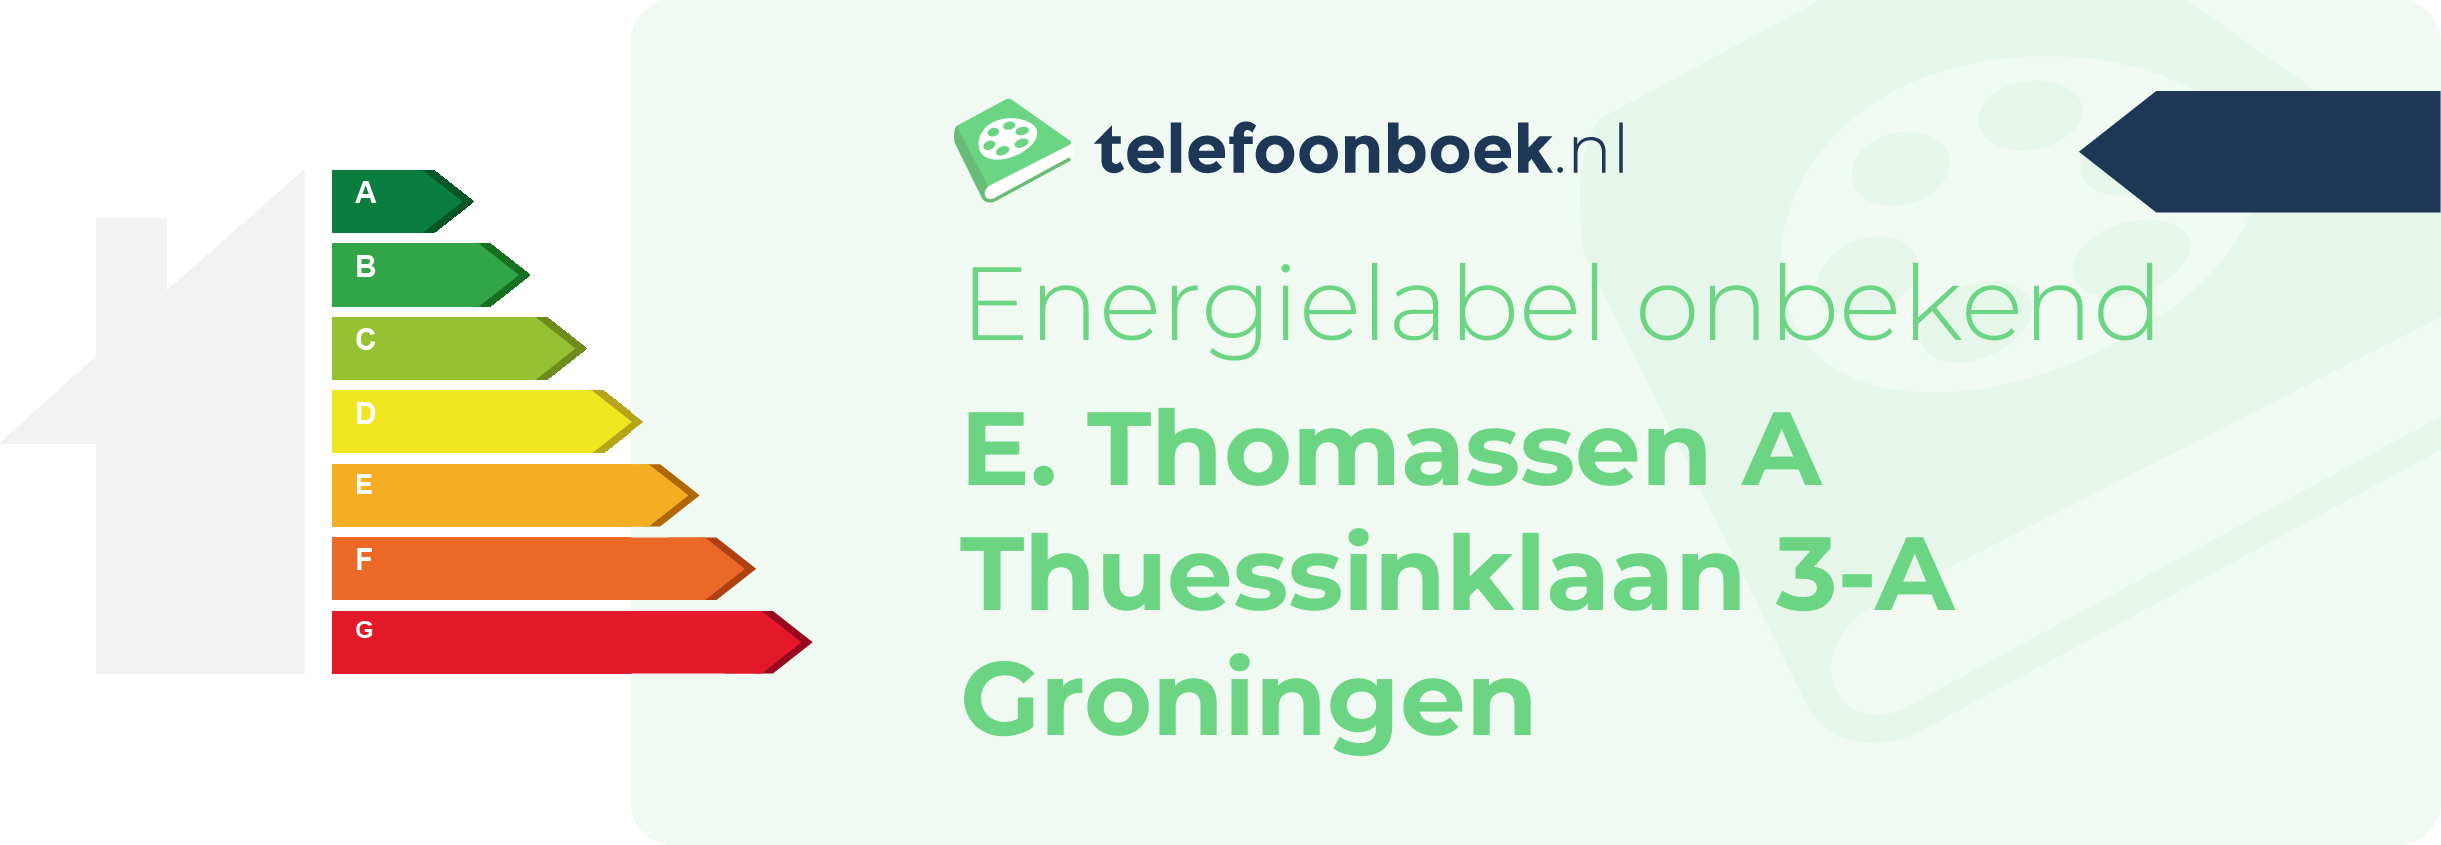 Energielabel E. Thomassen A Thuessinklaan 3-A Groningen